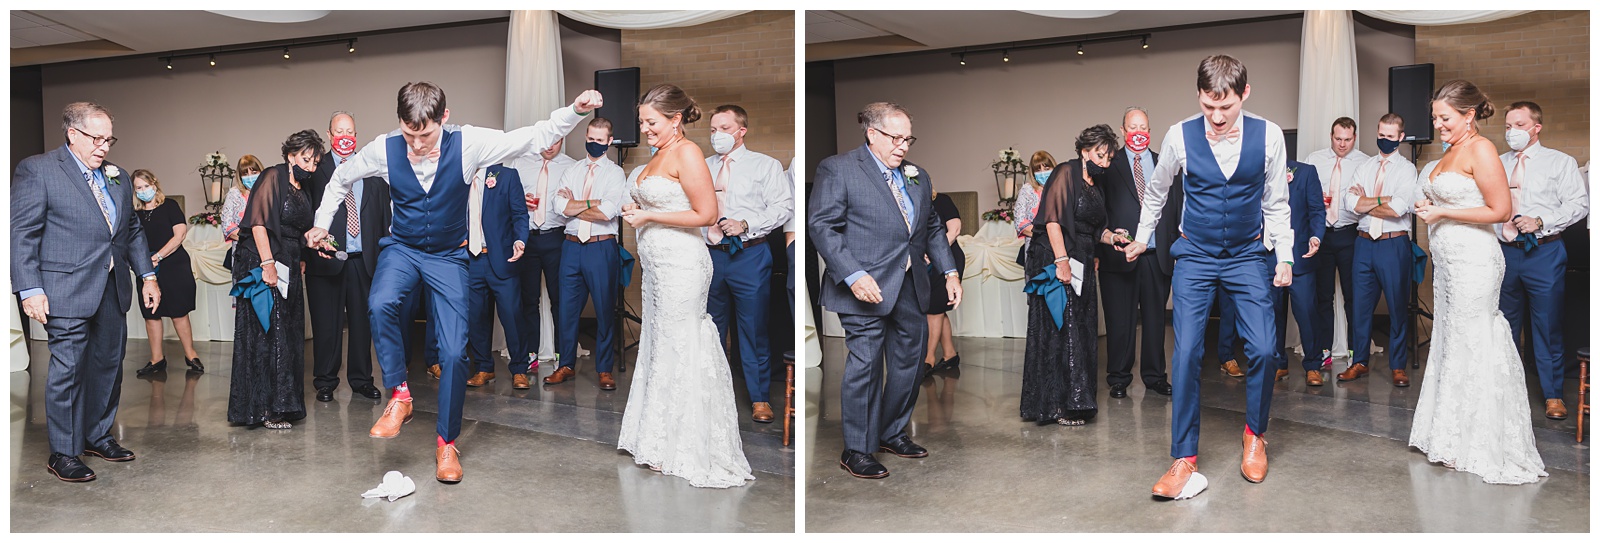 Wedding photography at The Venue in Leawood by Kansas City wedding photographers Wisdom-Watson Weddings.